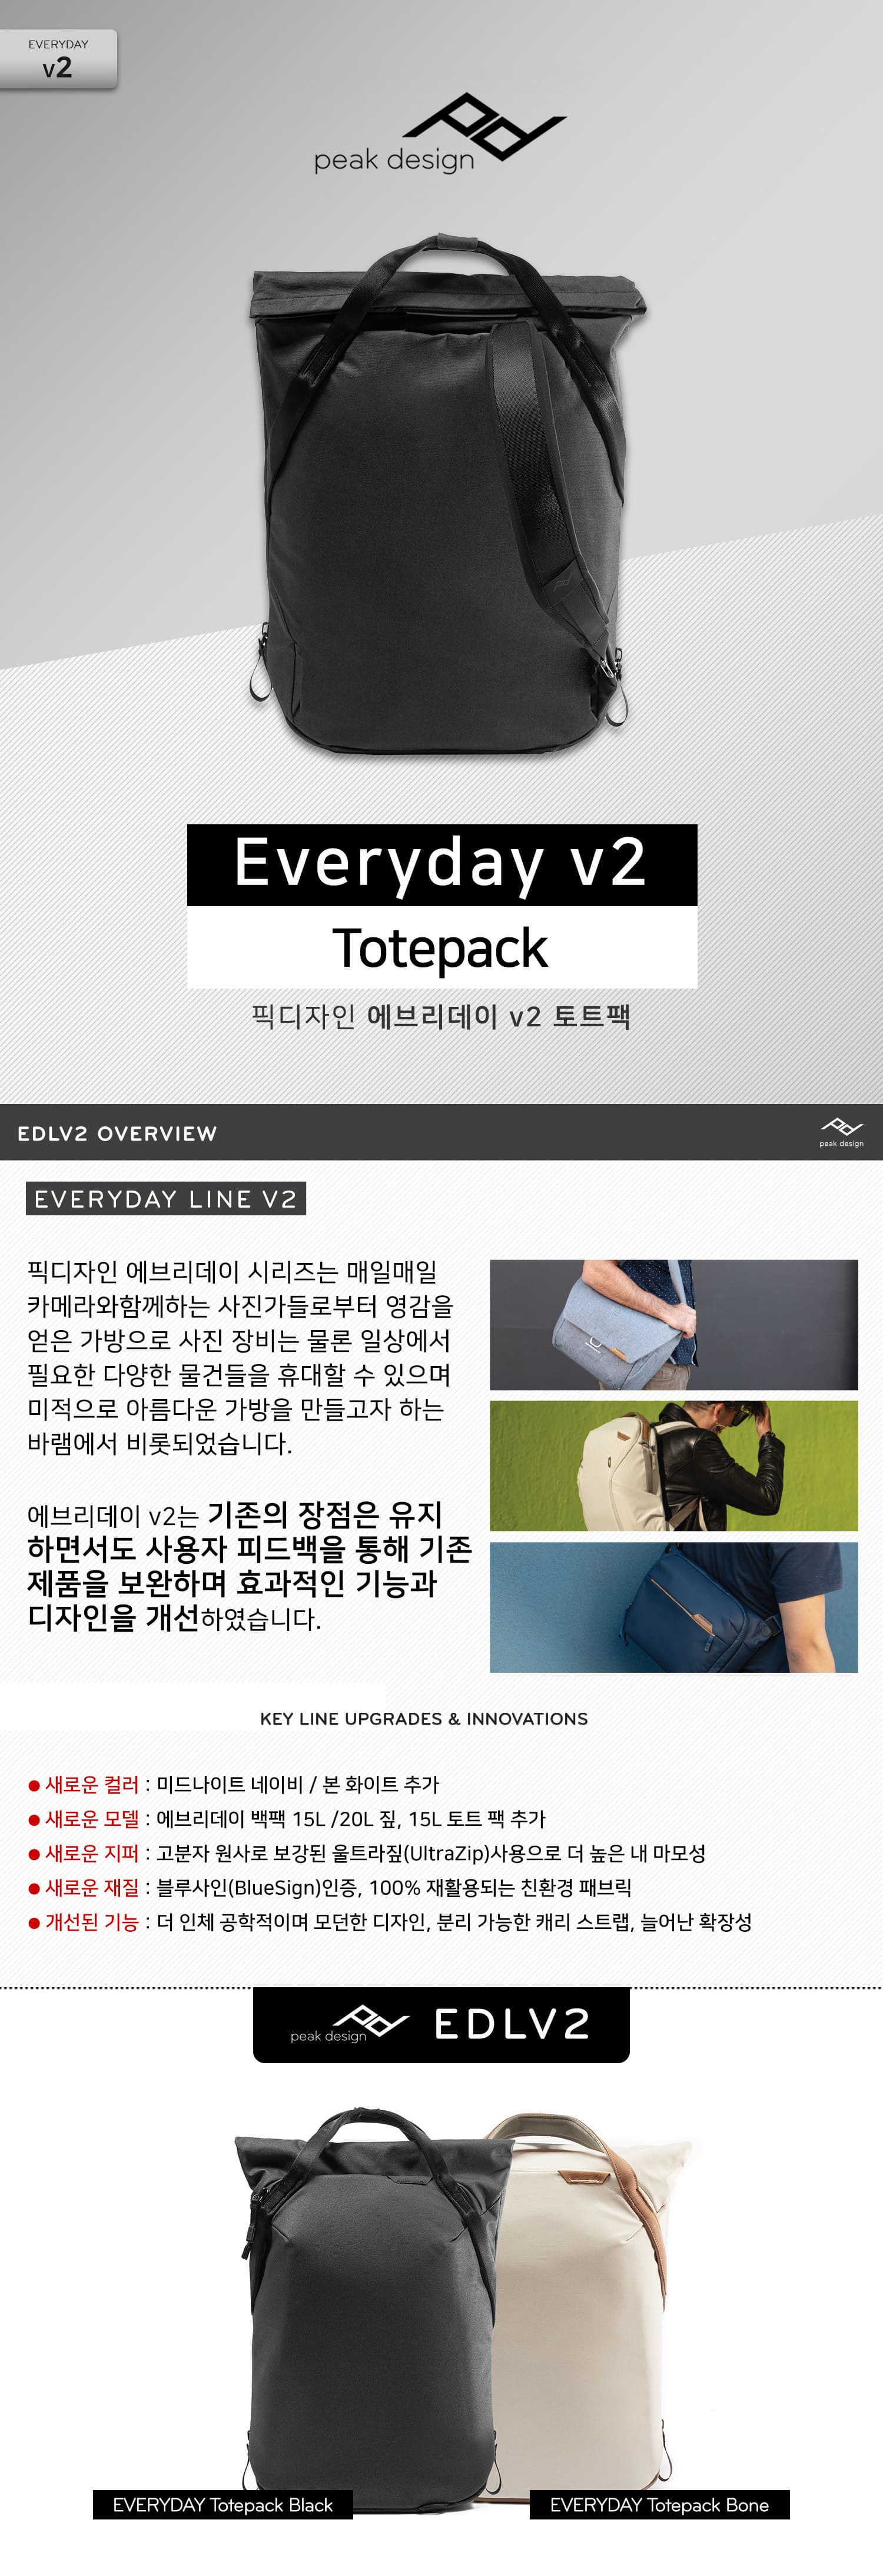 peak design Everyday v2 Totepack Black   긮 v2 Ʈ 